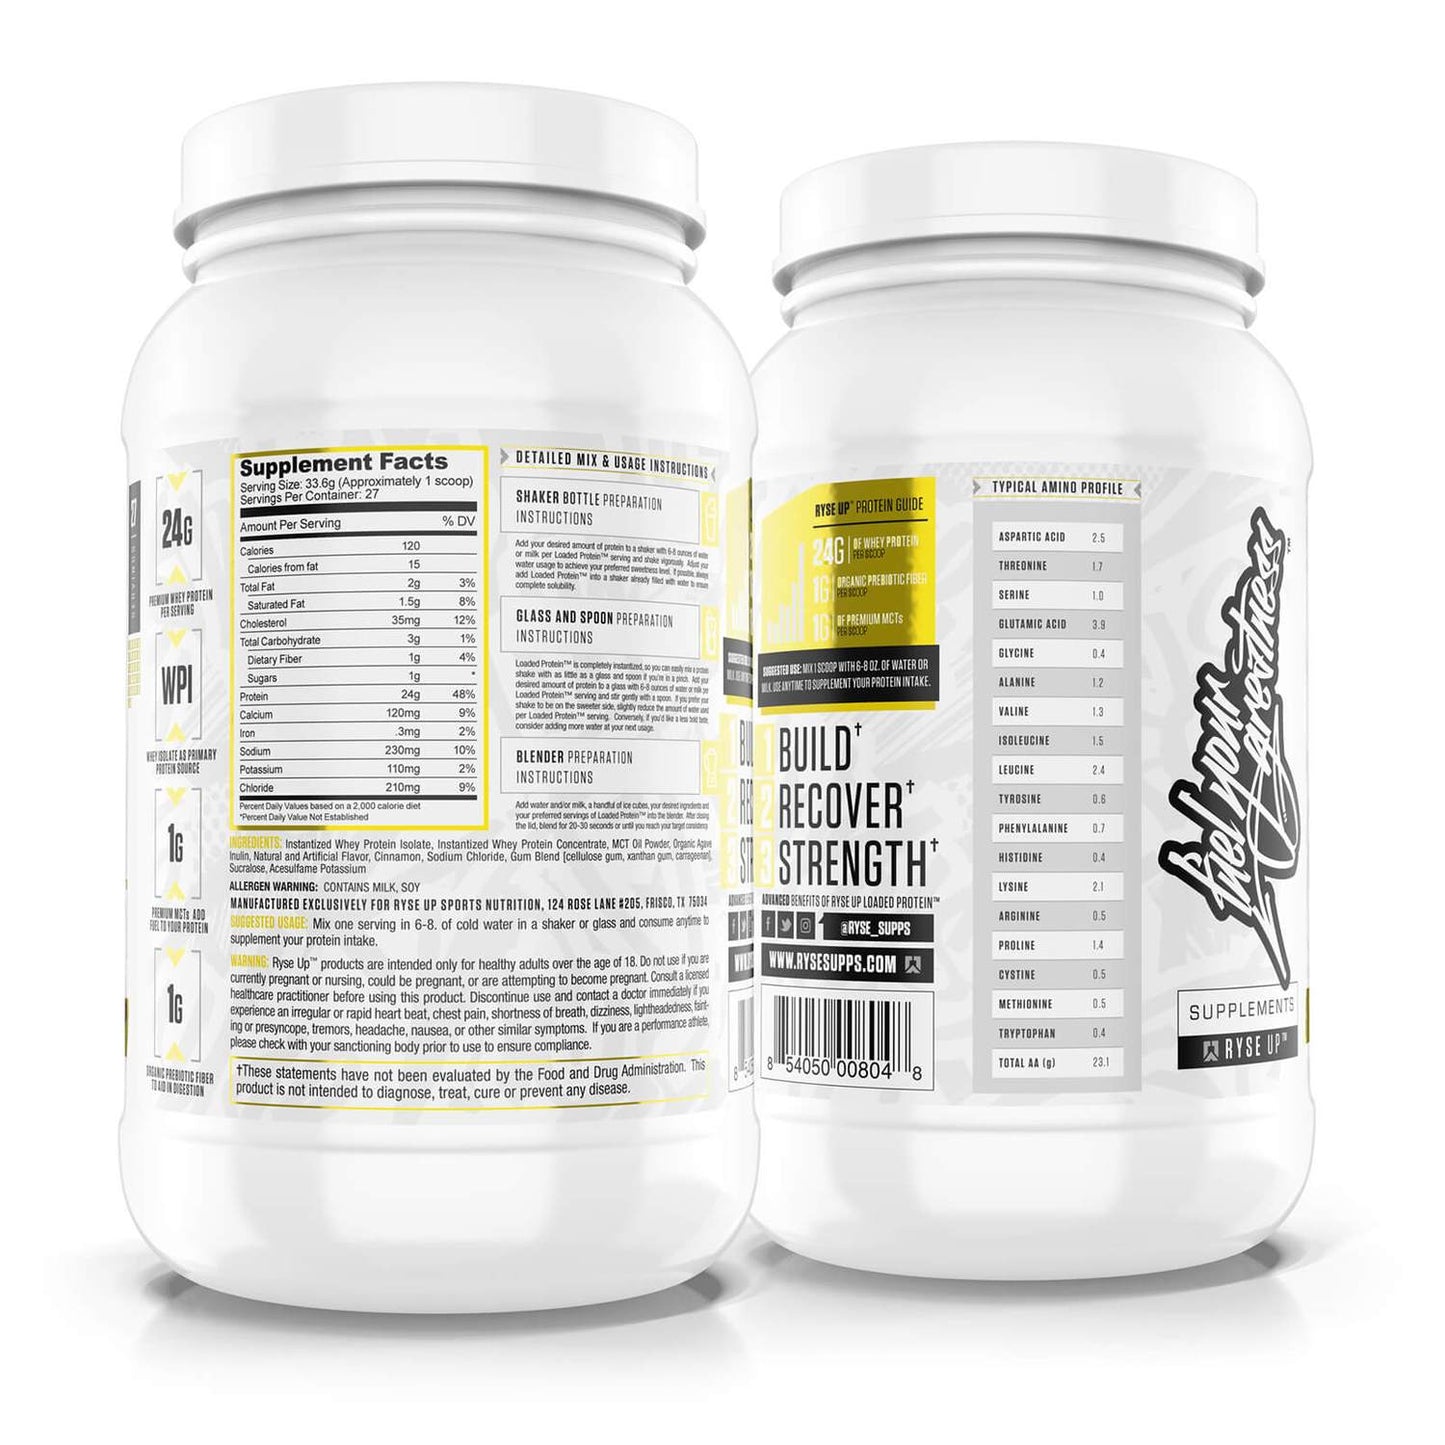 RYSE Loaded Protein Powder, 20 serve, 25g protein Ingredients - CVS Pharmacy